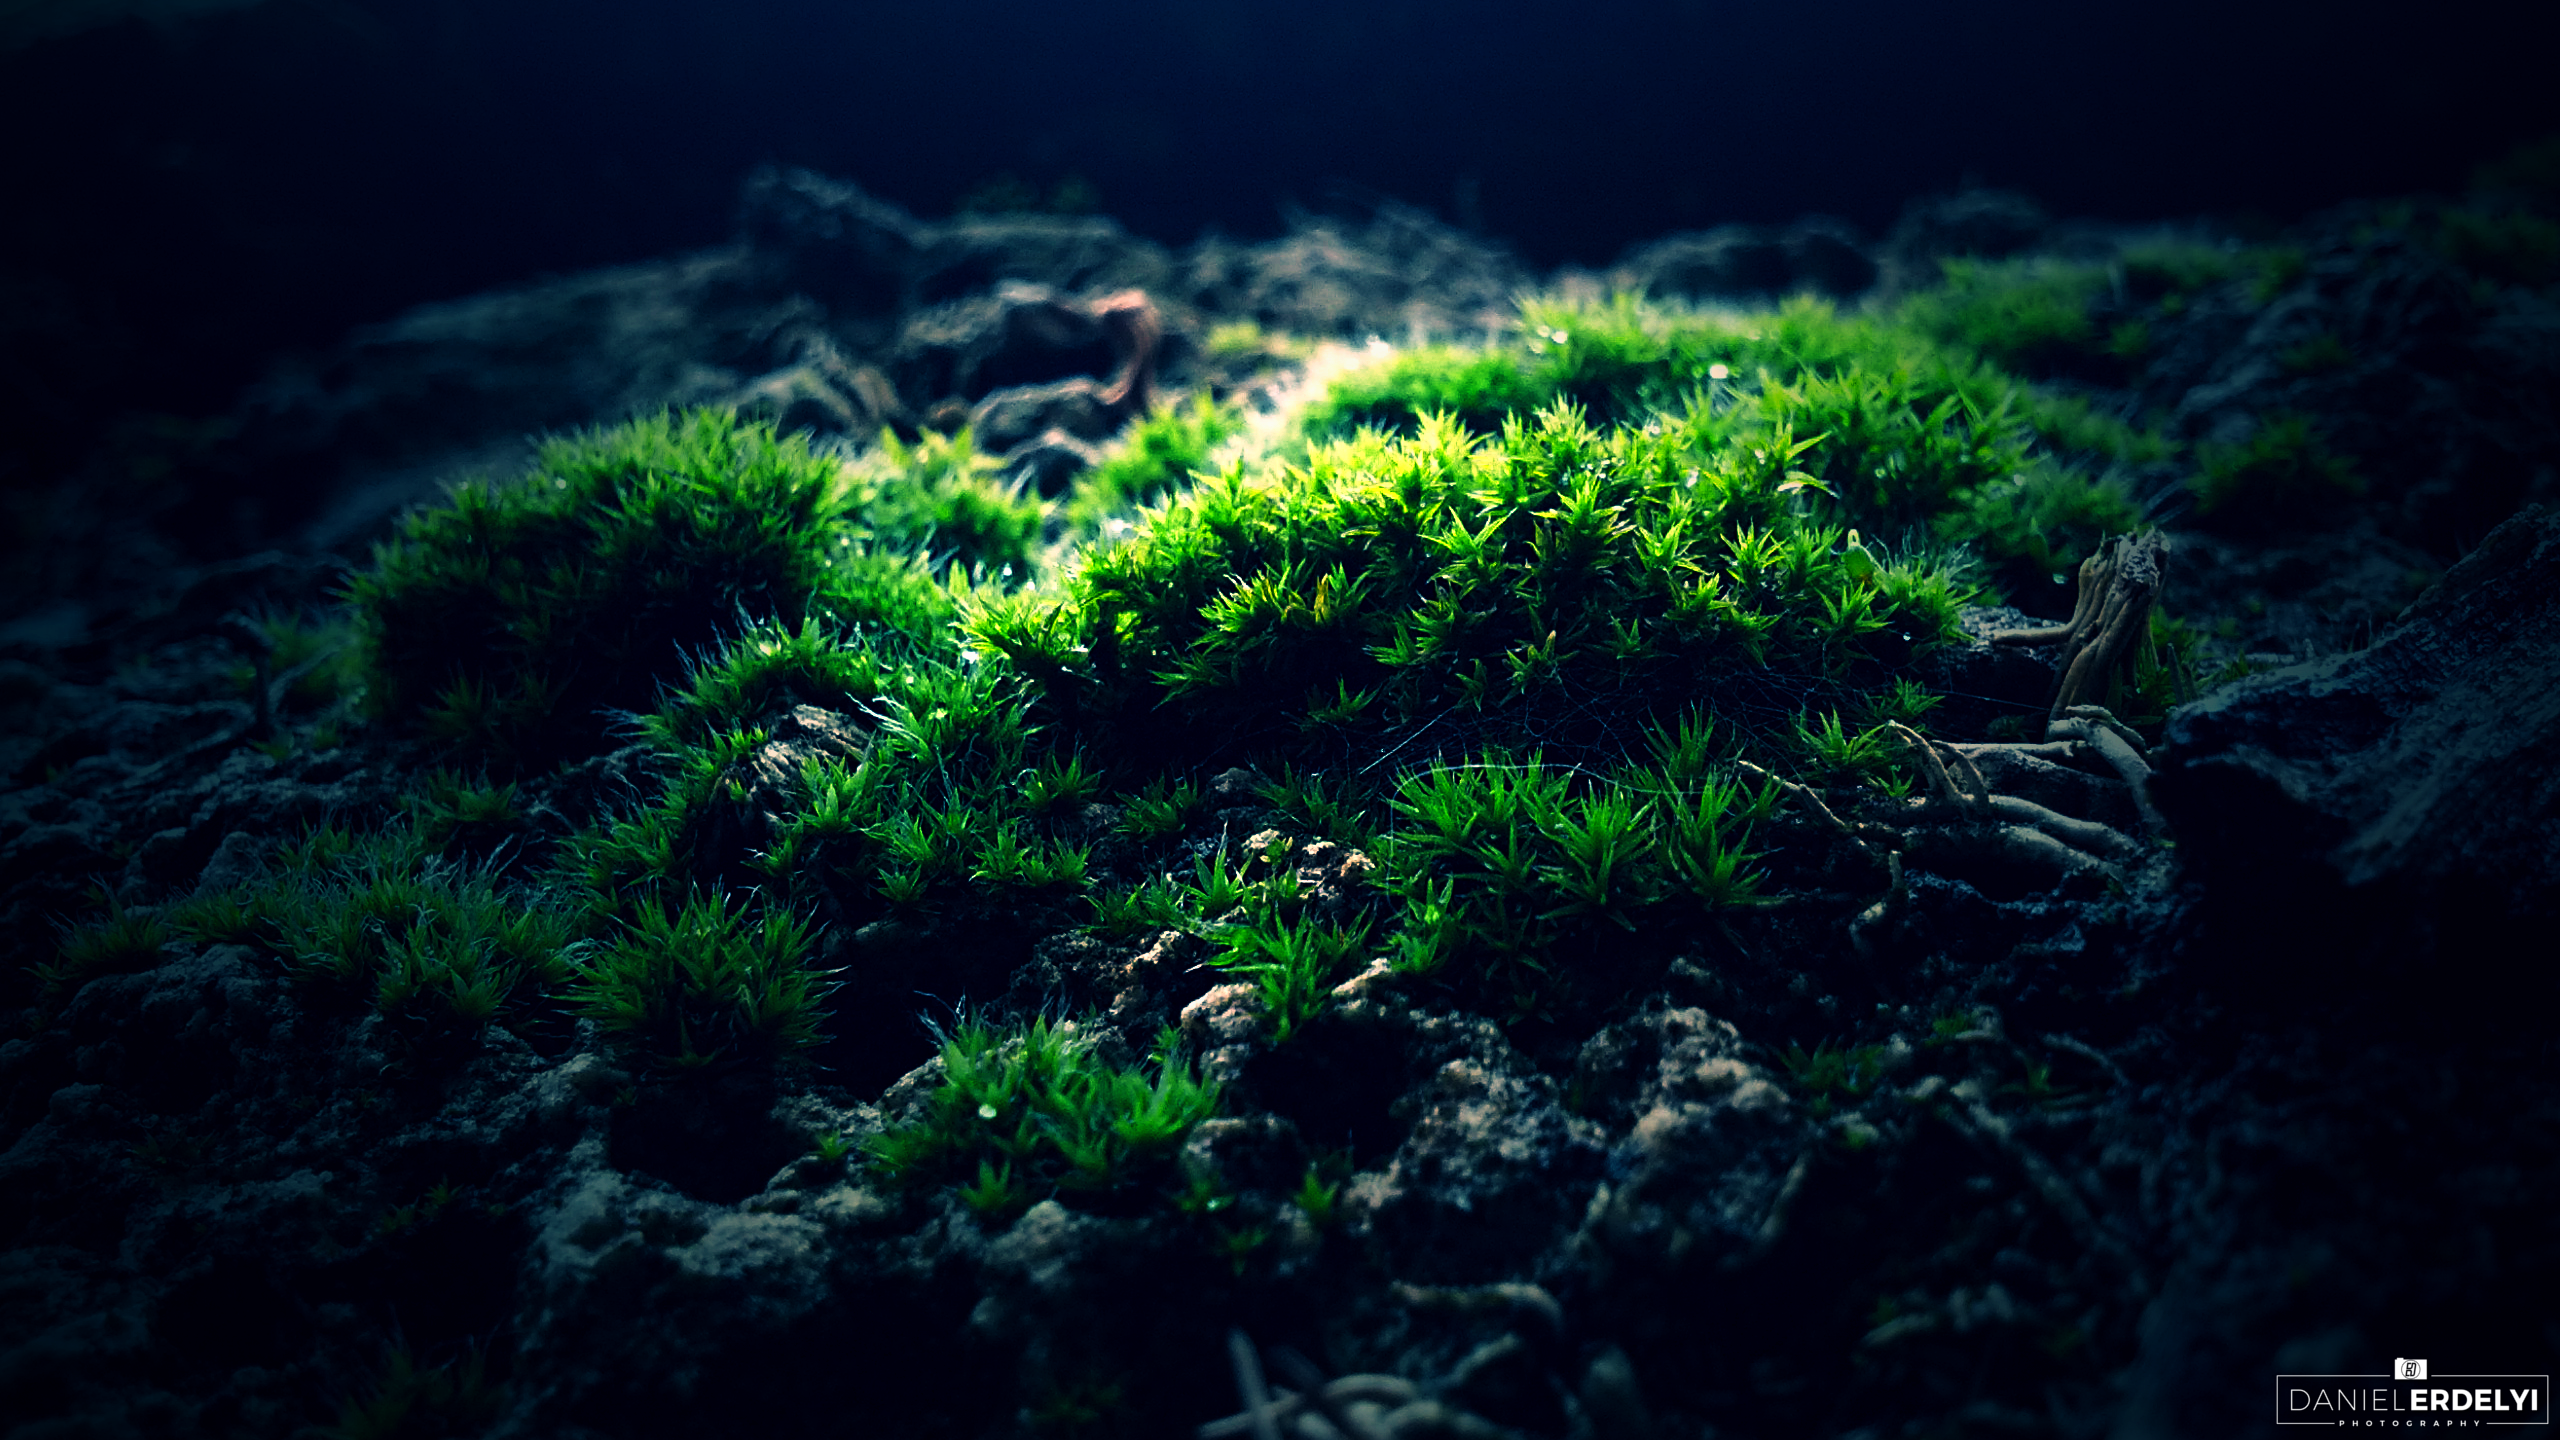 General 2560x1440 moss macro photography green plants nature